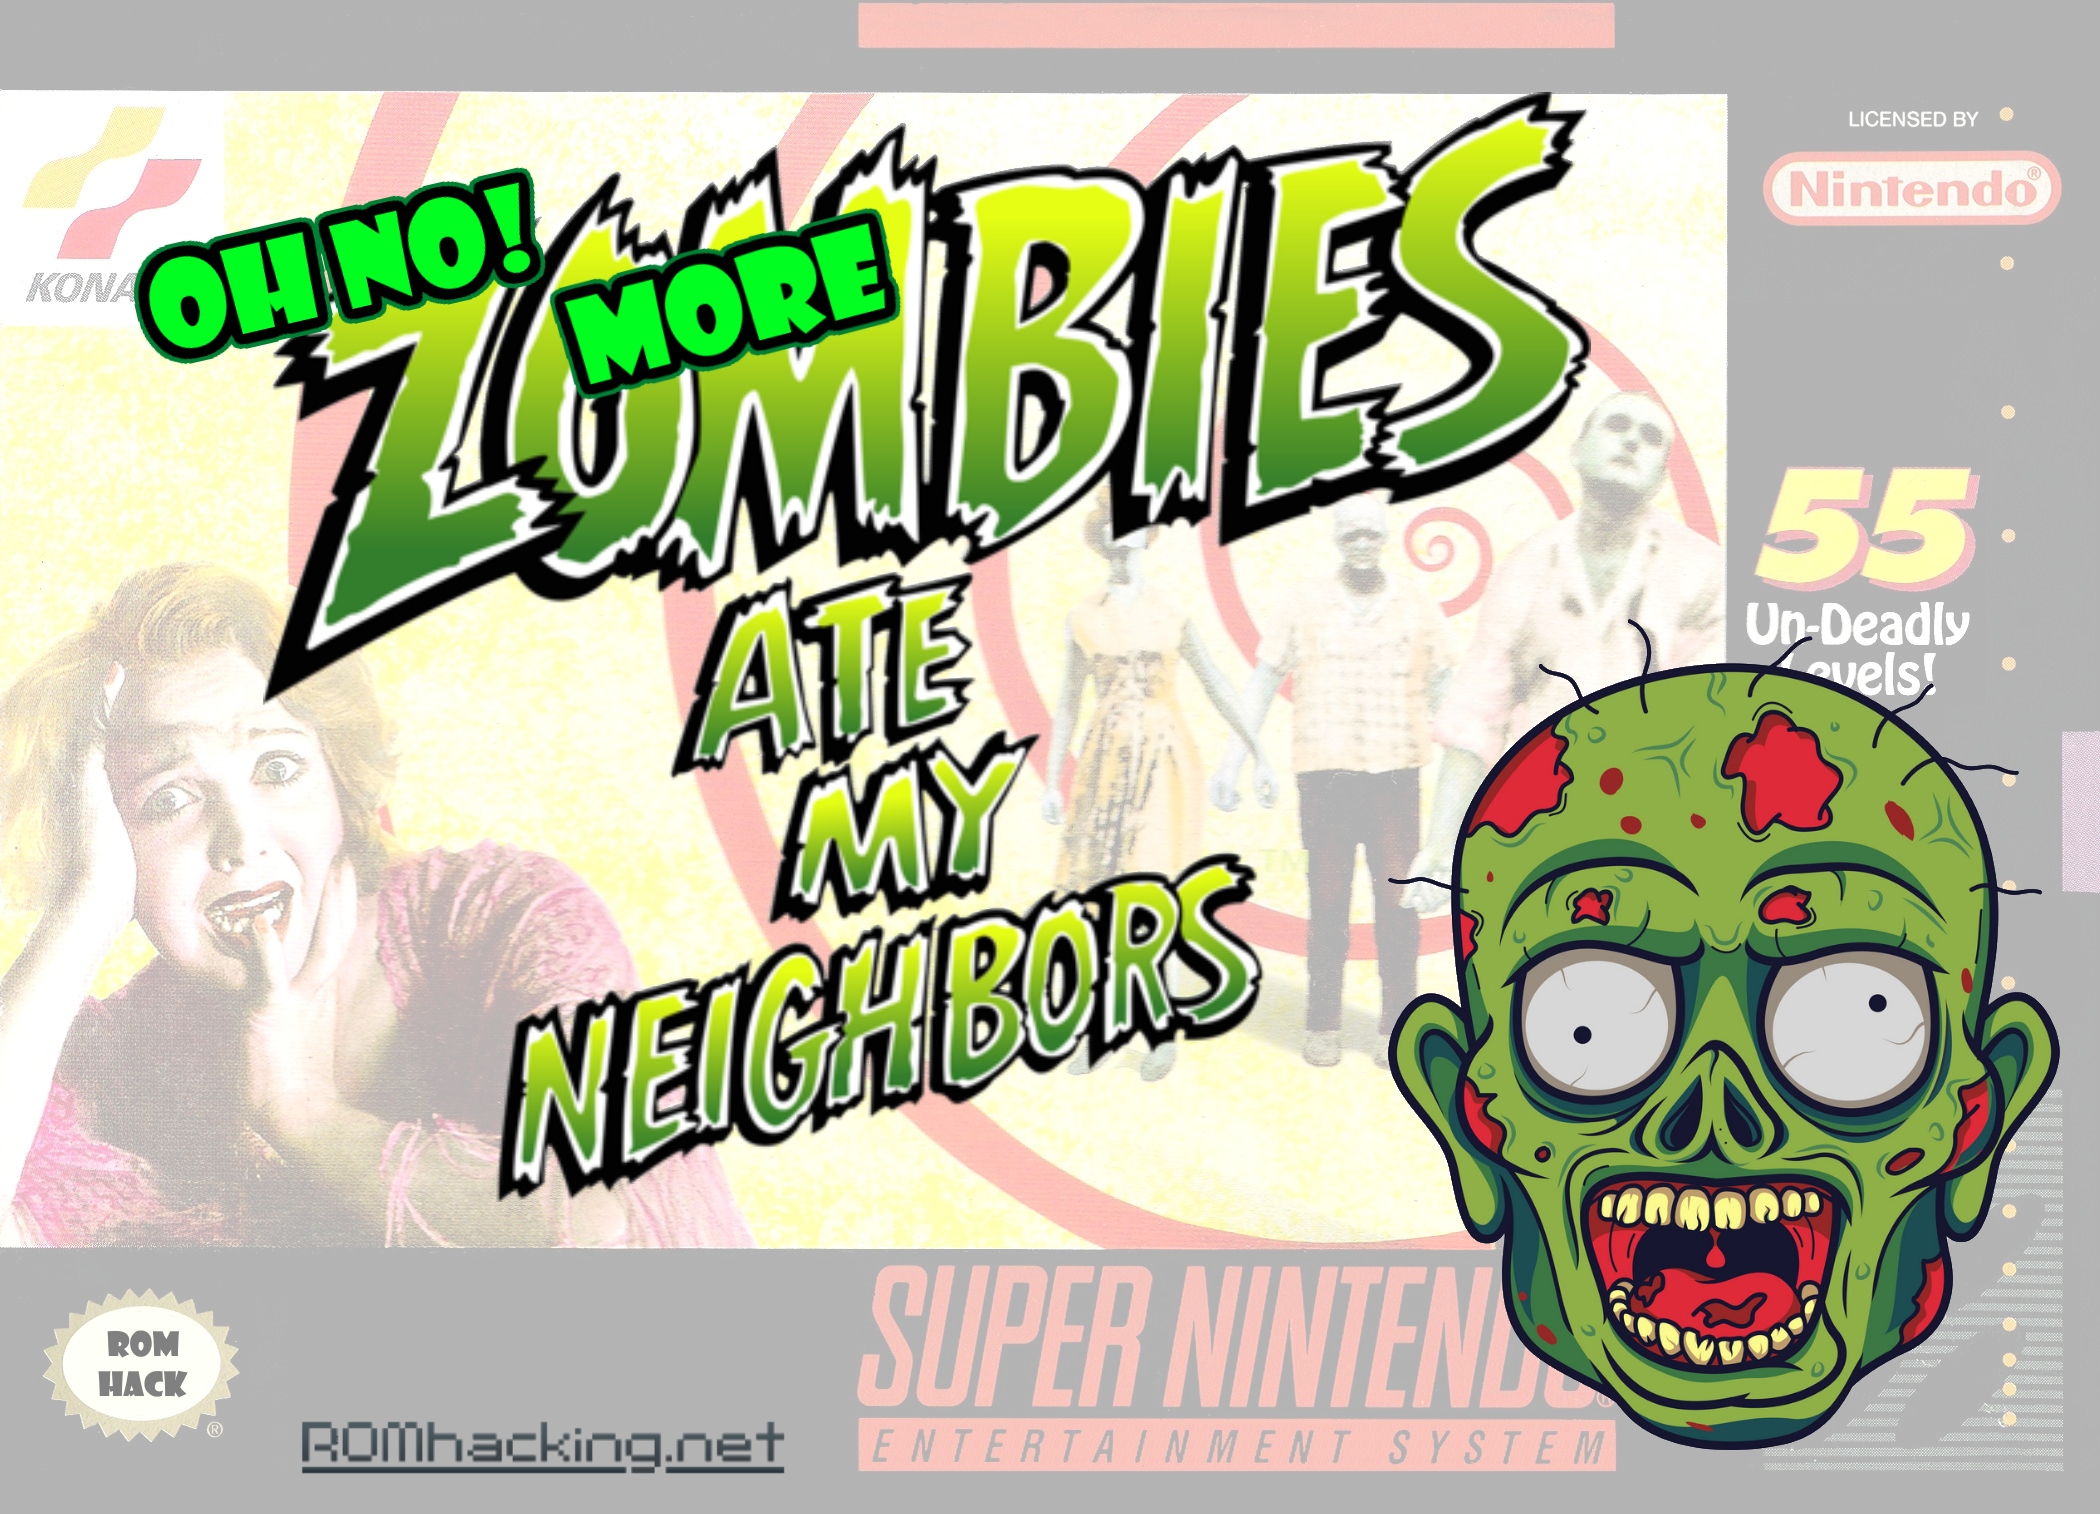  Hacks - Zombies Ate My Neighbors - The Sequel